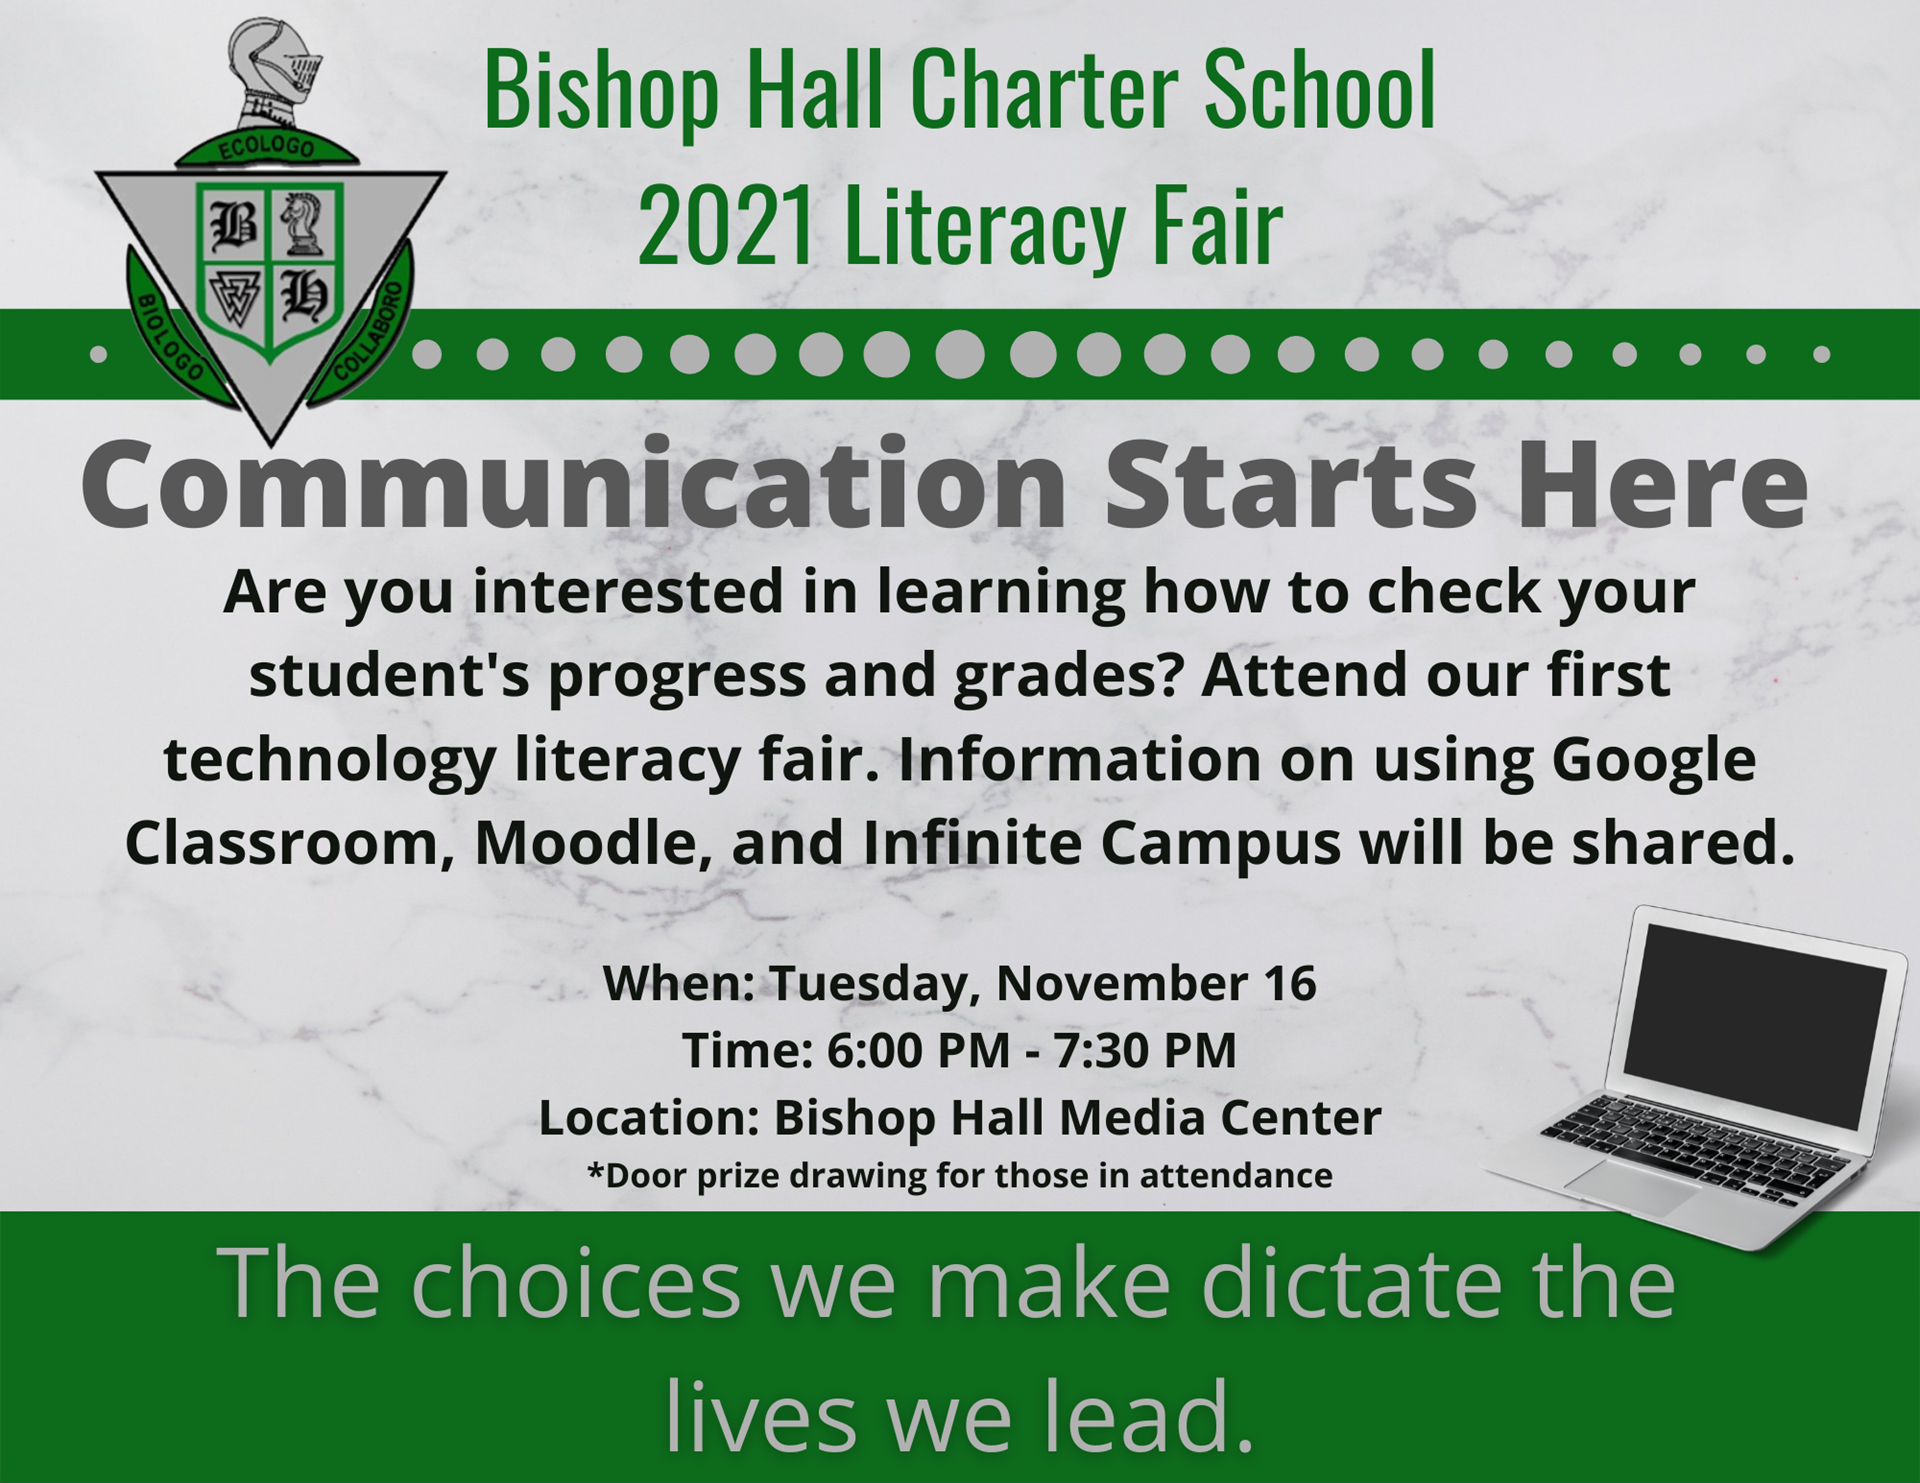 Bishop Hall Literacy Fair - Nov 16, 6:00 - 7:30 pm 